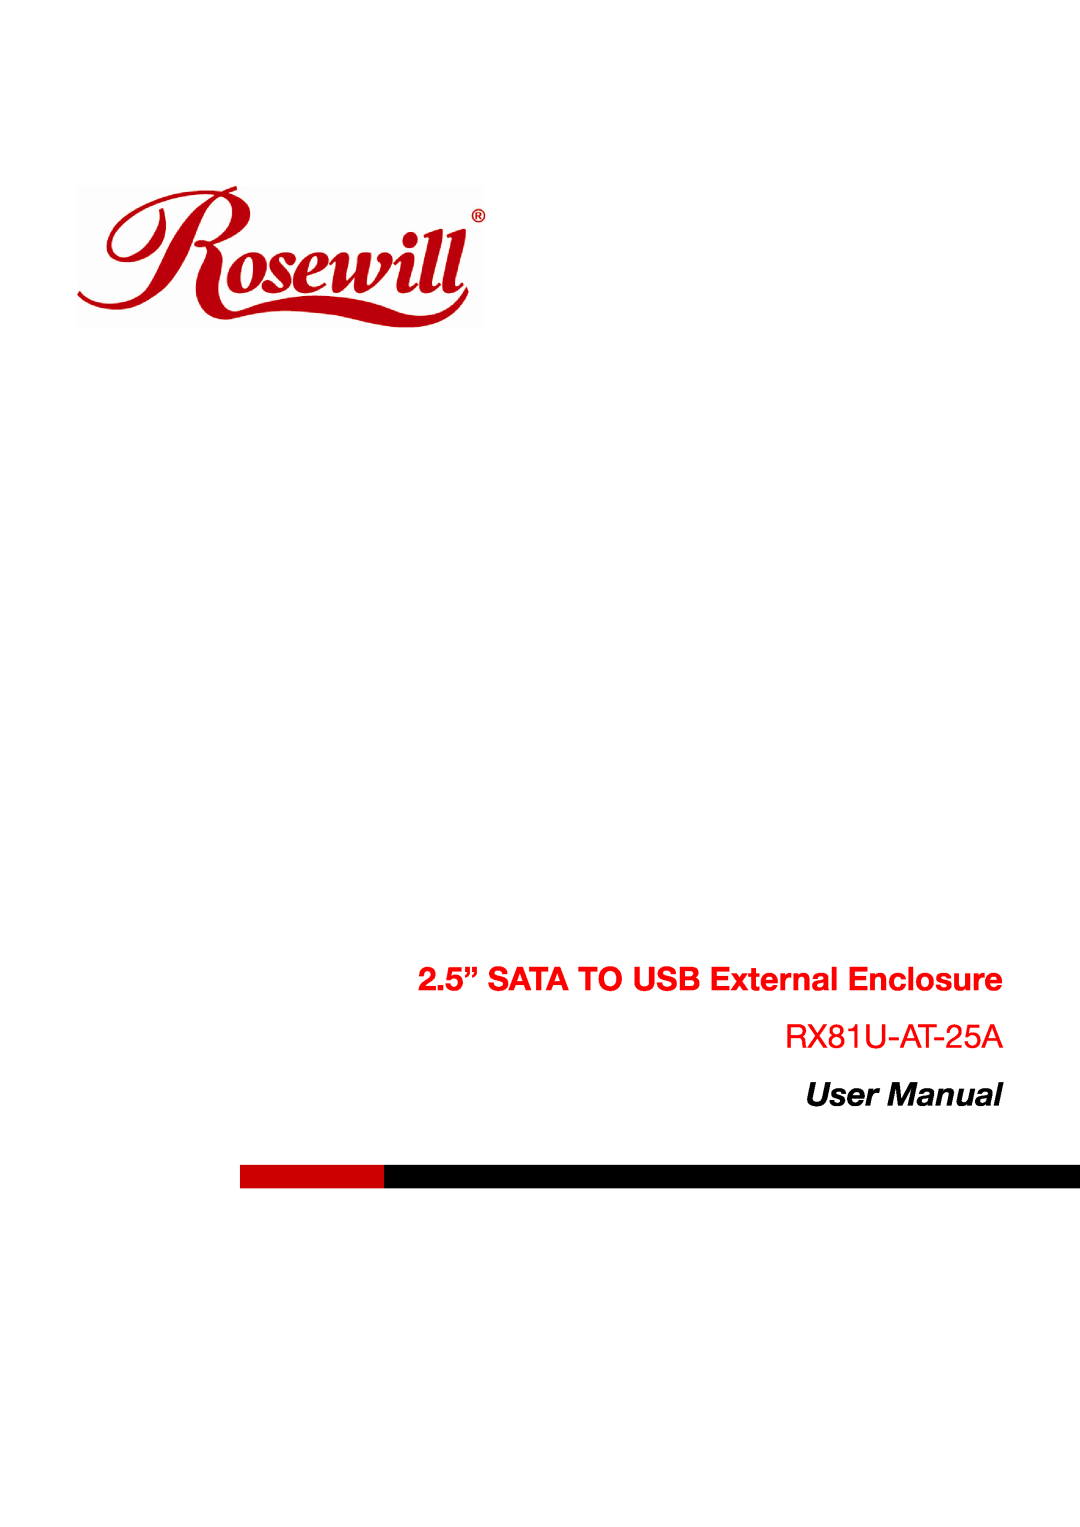 Rosewill RX81U-AT-25A user manual 2.5” SATA TO USB External Enclosure, User Manual 